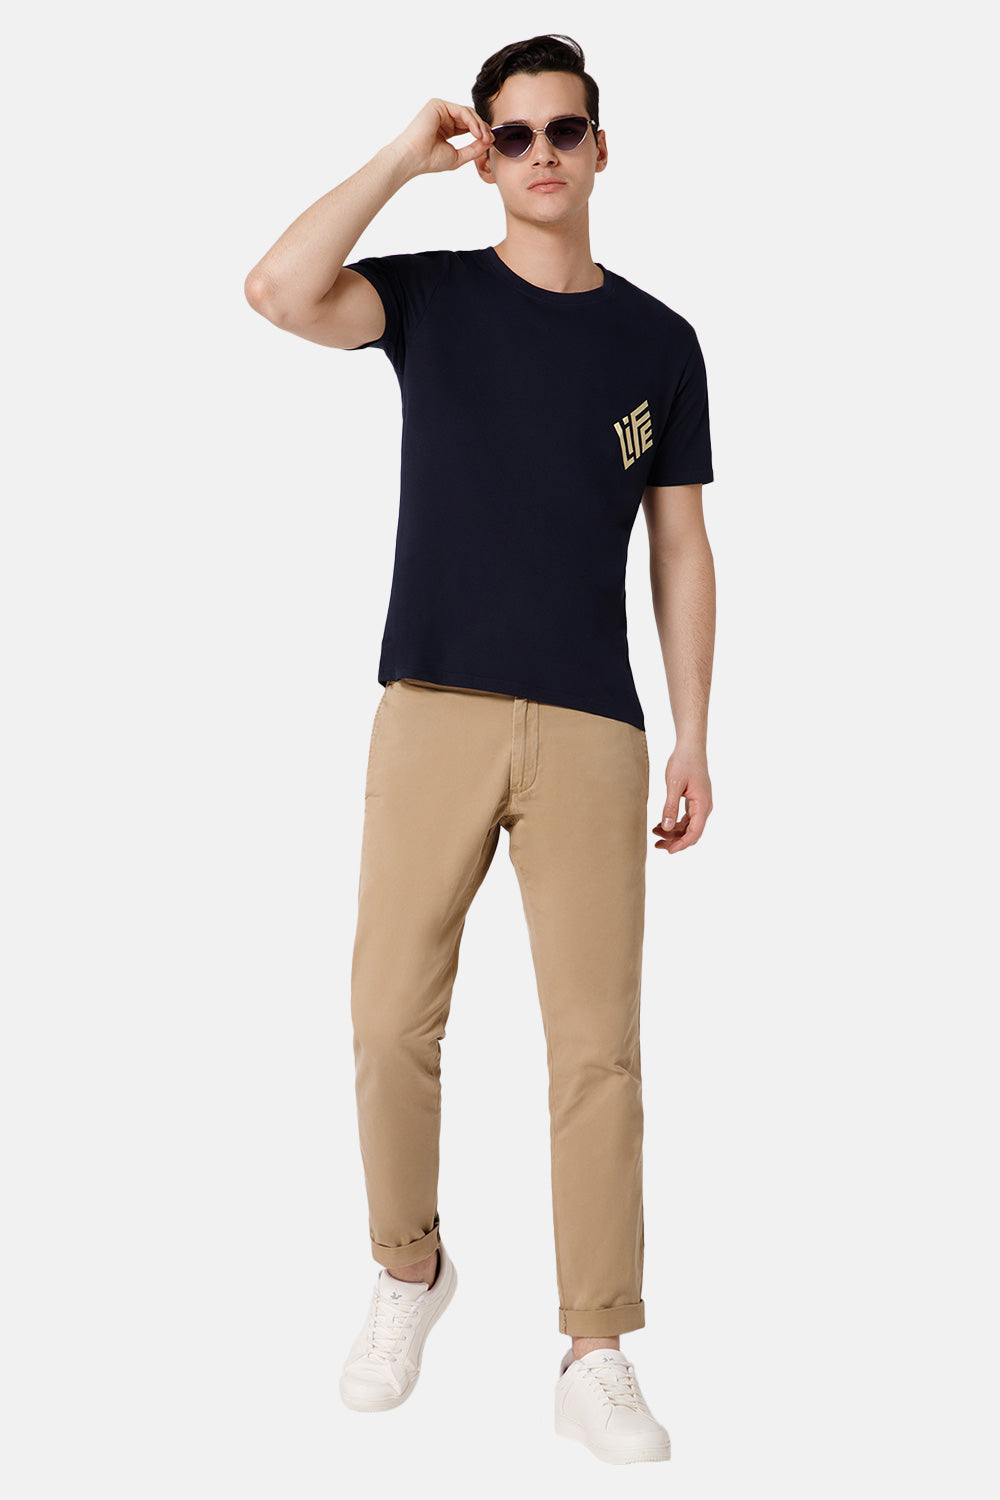 Enhance Printed Crew Neck Men's Casual T-Shirts - Navy - TS25